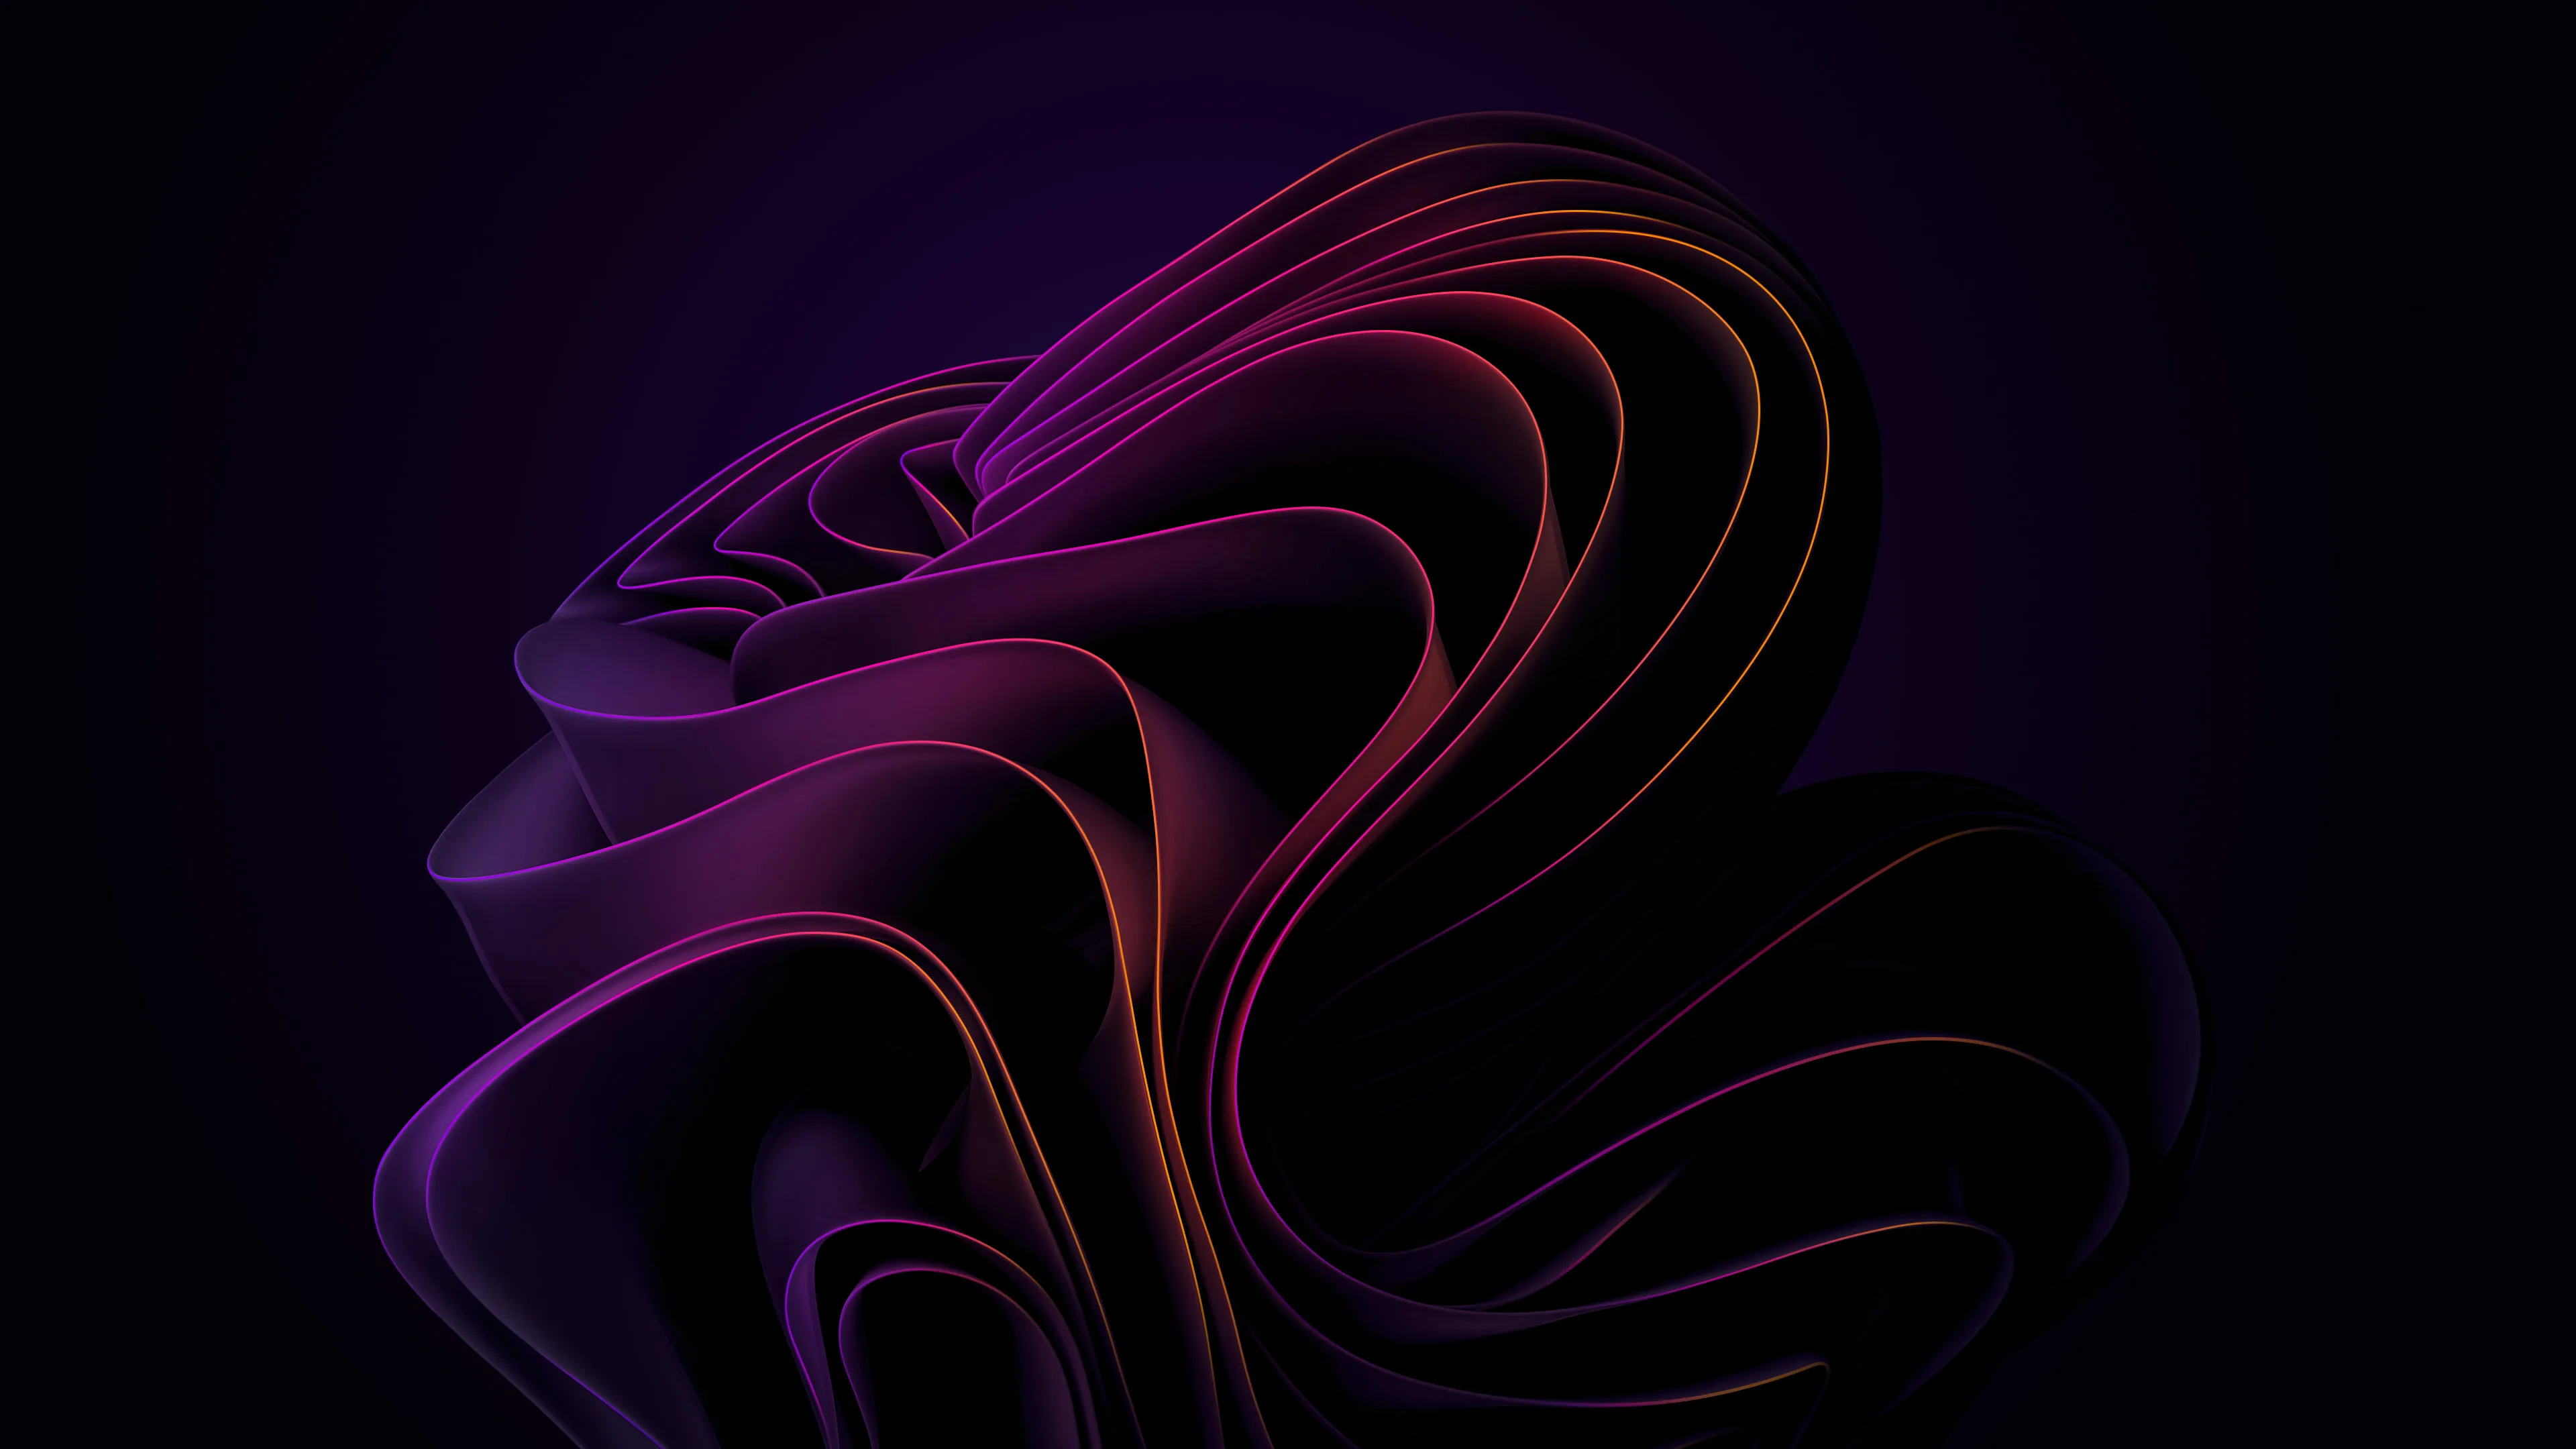 Wallpaper Atmosphere Purple Violet Pink Magenta Background  Download  Free Image